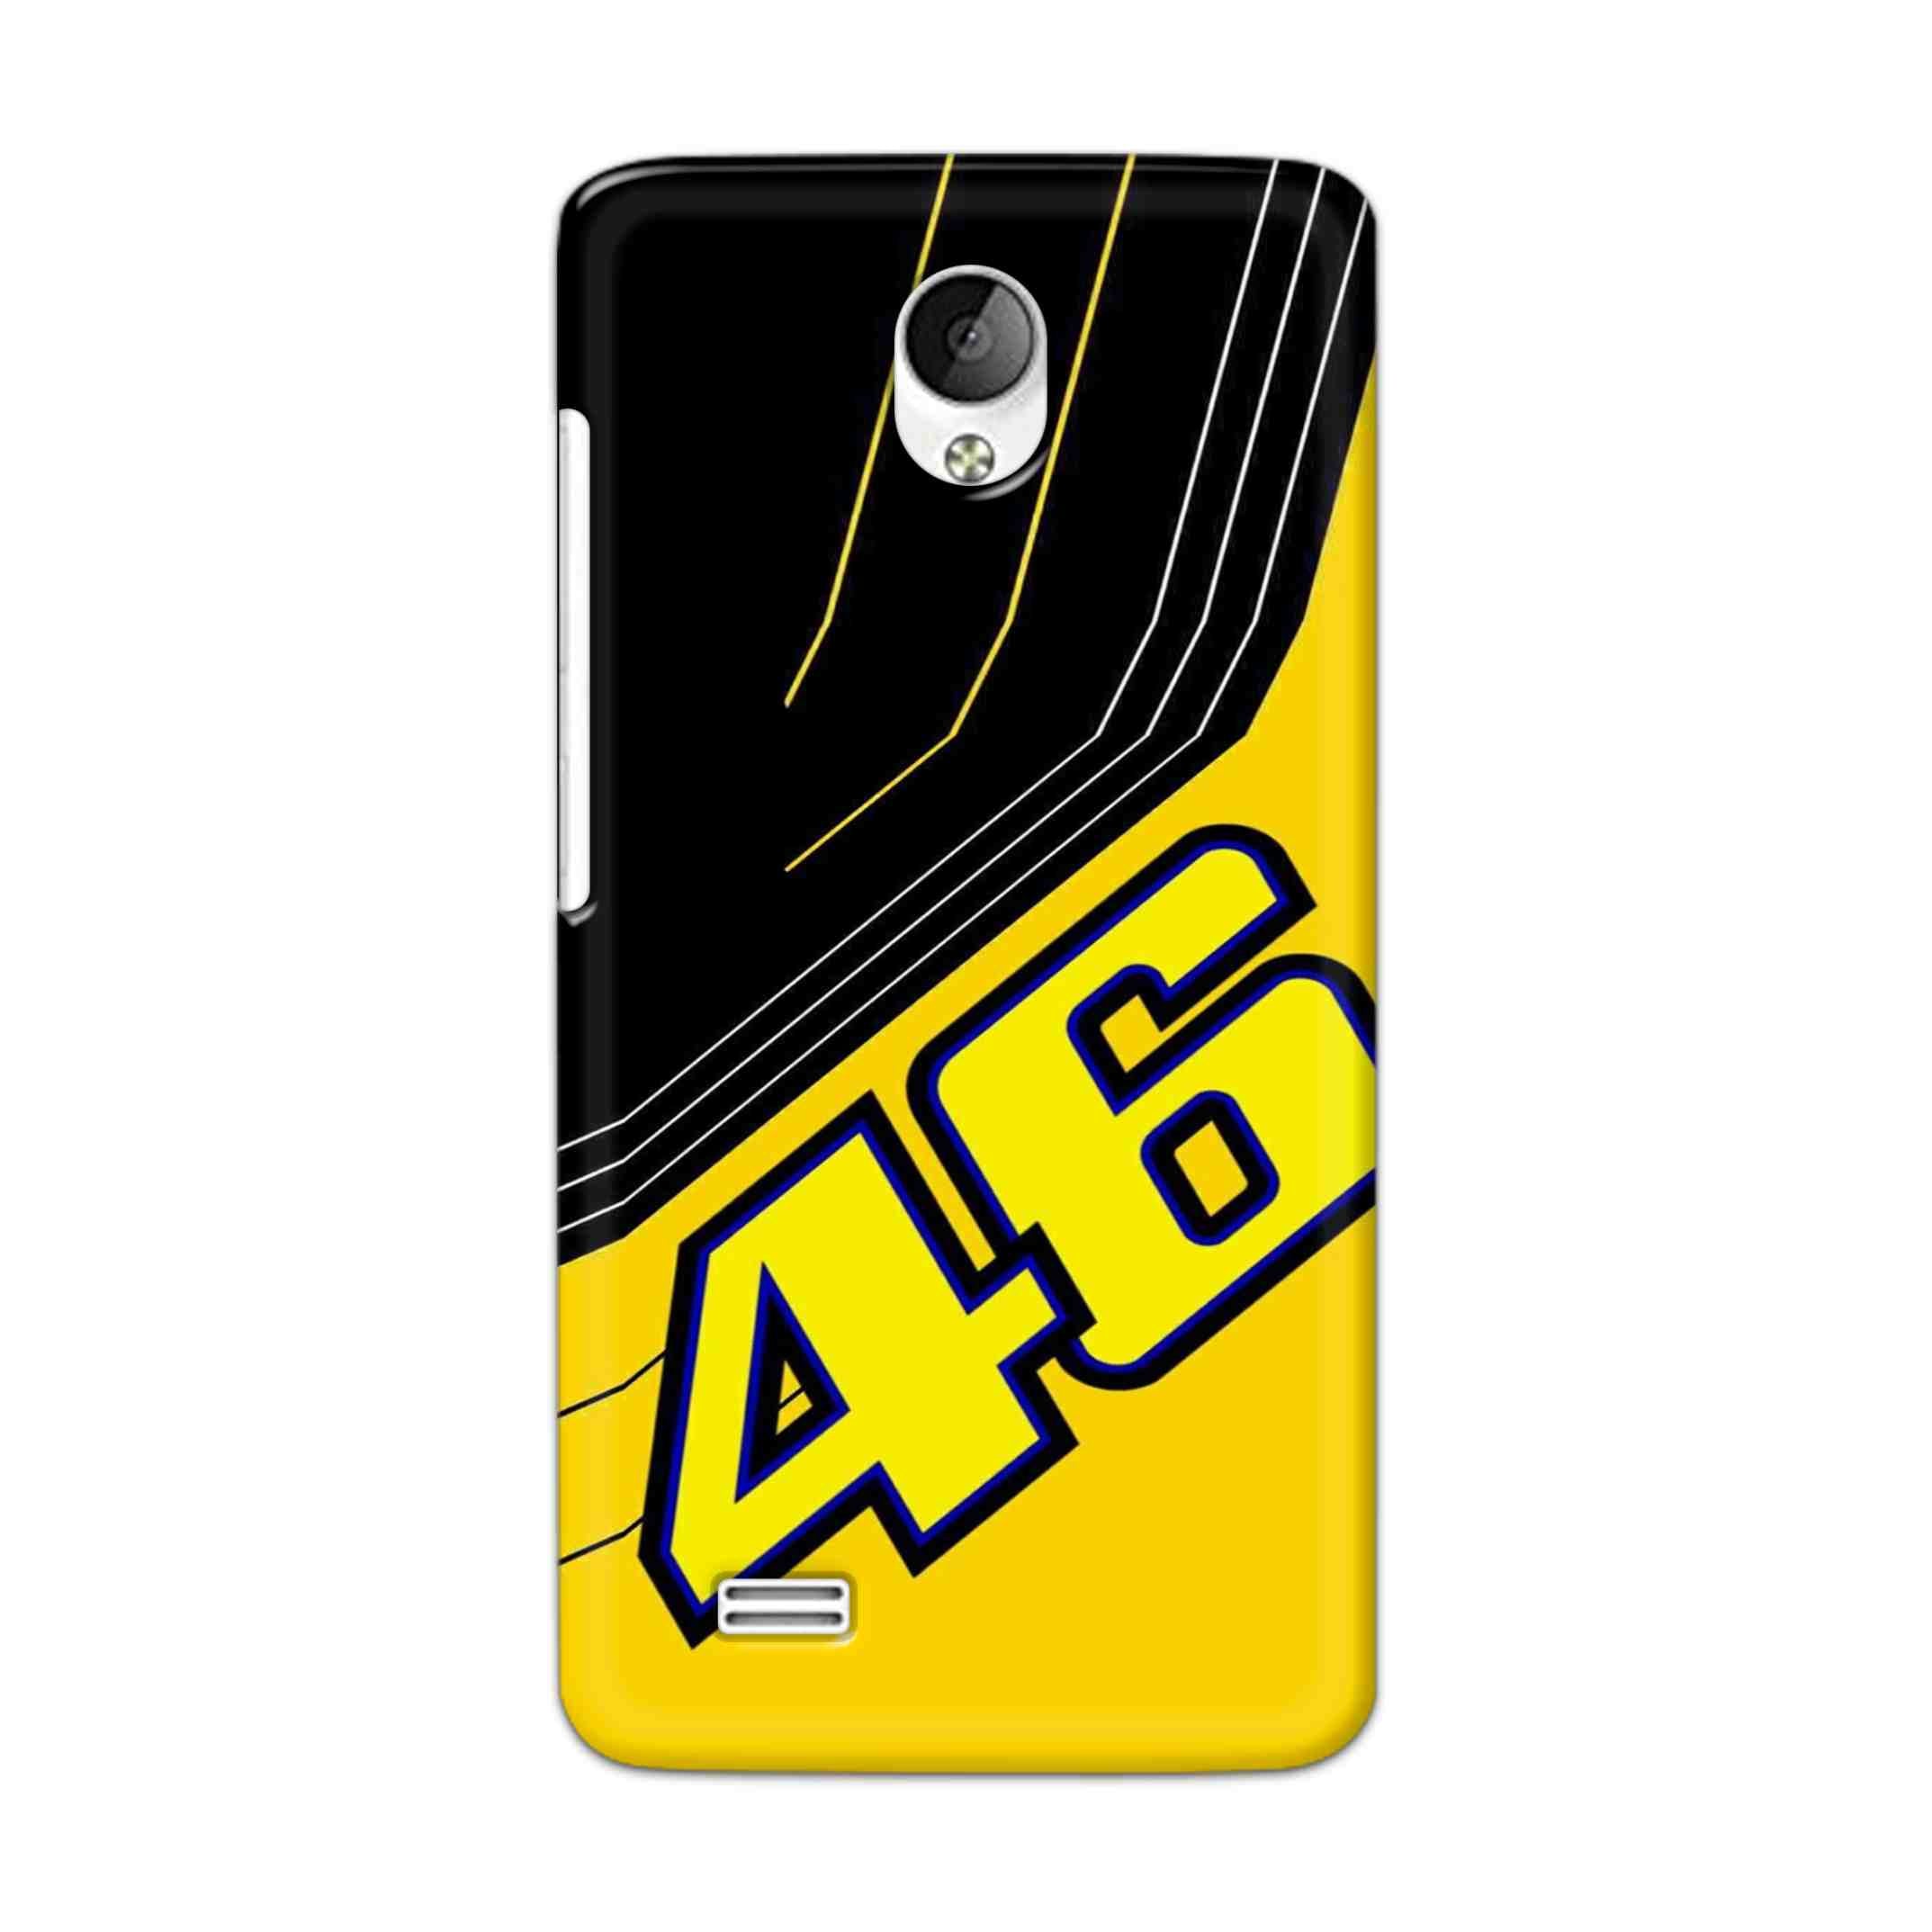 Buy 46 Hard Back Mobile Phone Case Cover For Vivo Y21 / Vivo Y21L Online